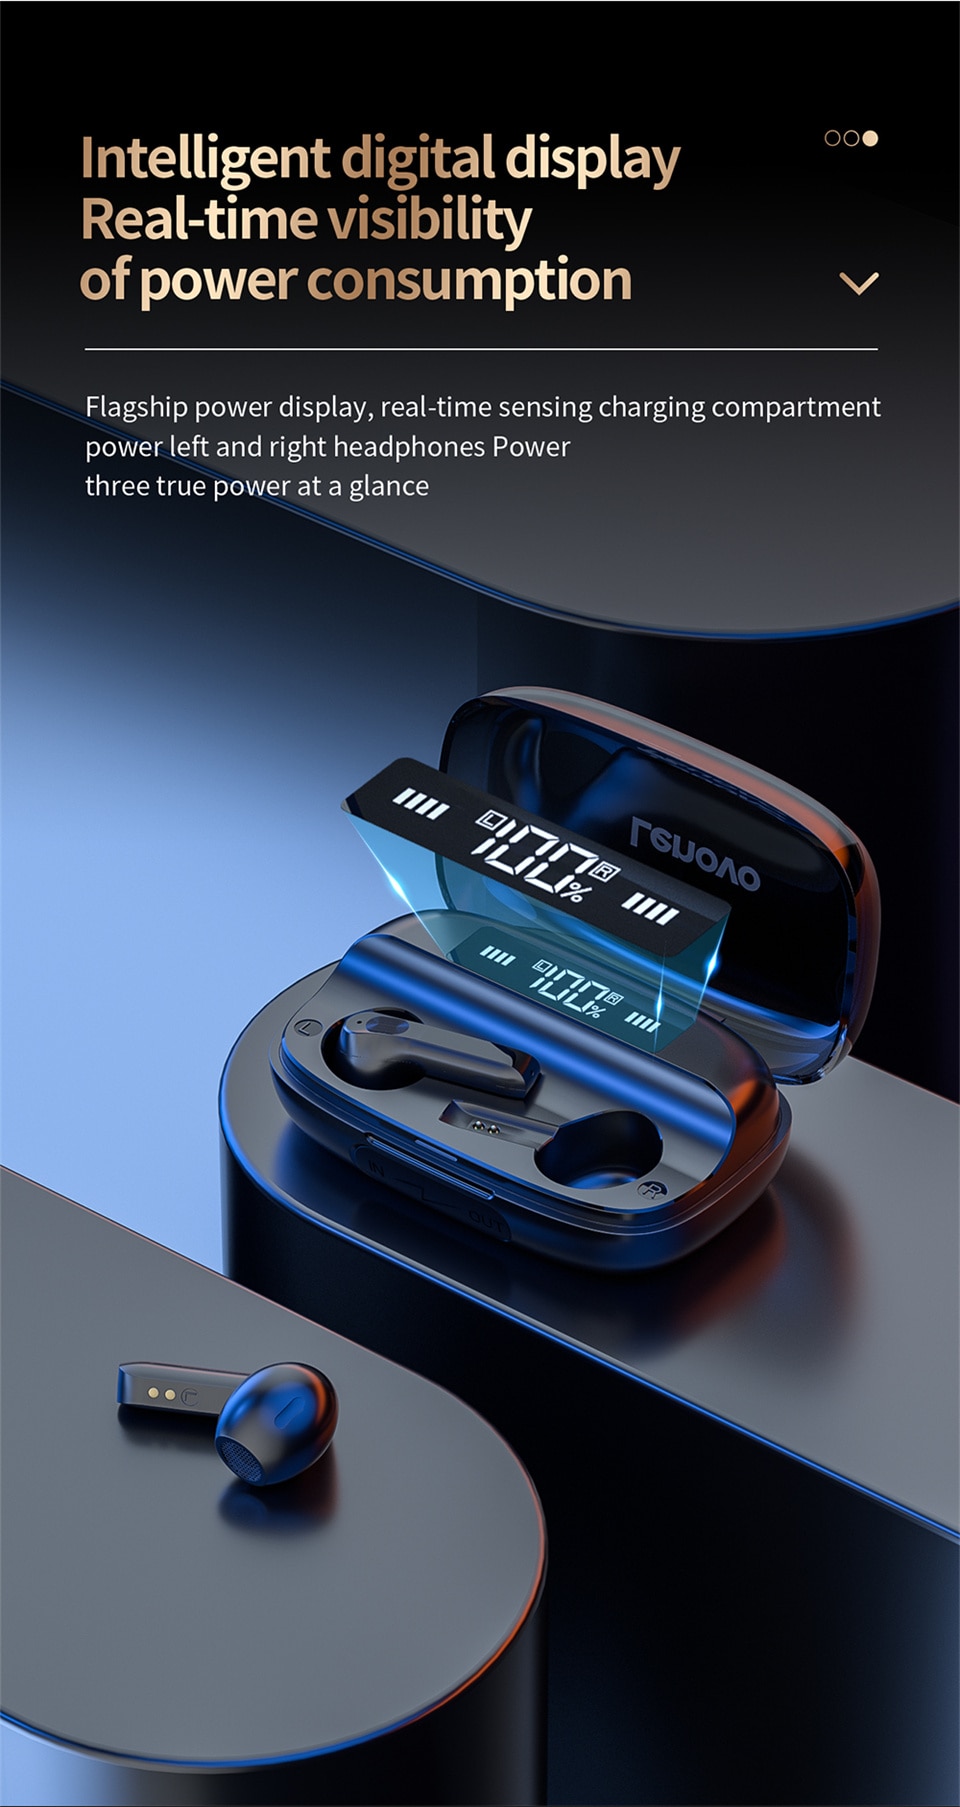 Lenovo QT81 Wireless Earphone 1200 mAh Bluetooth 5.0 Headphones AI Control Gaming Headset Stereo Bass Dual Mic Noise Reduction